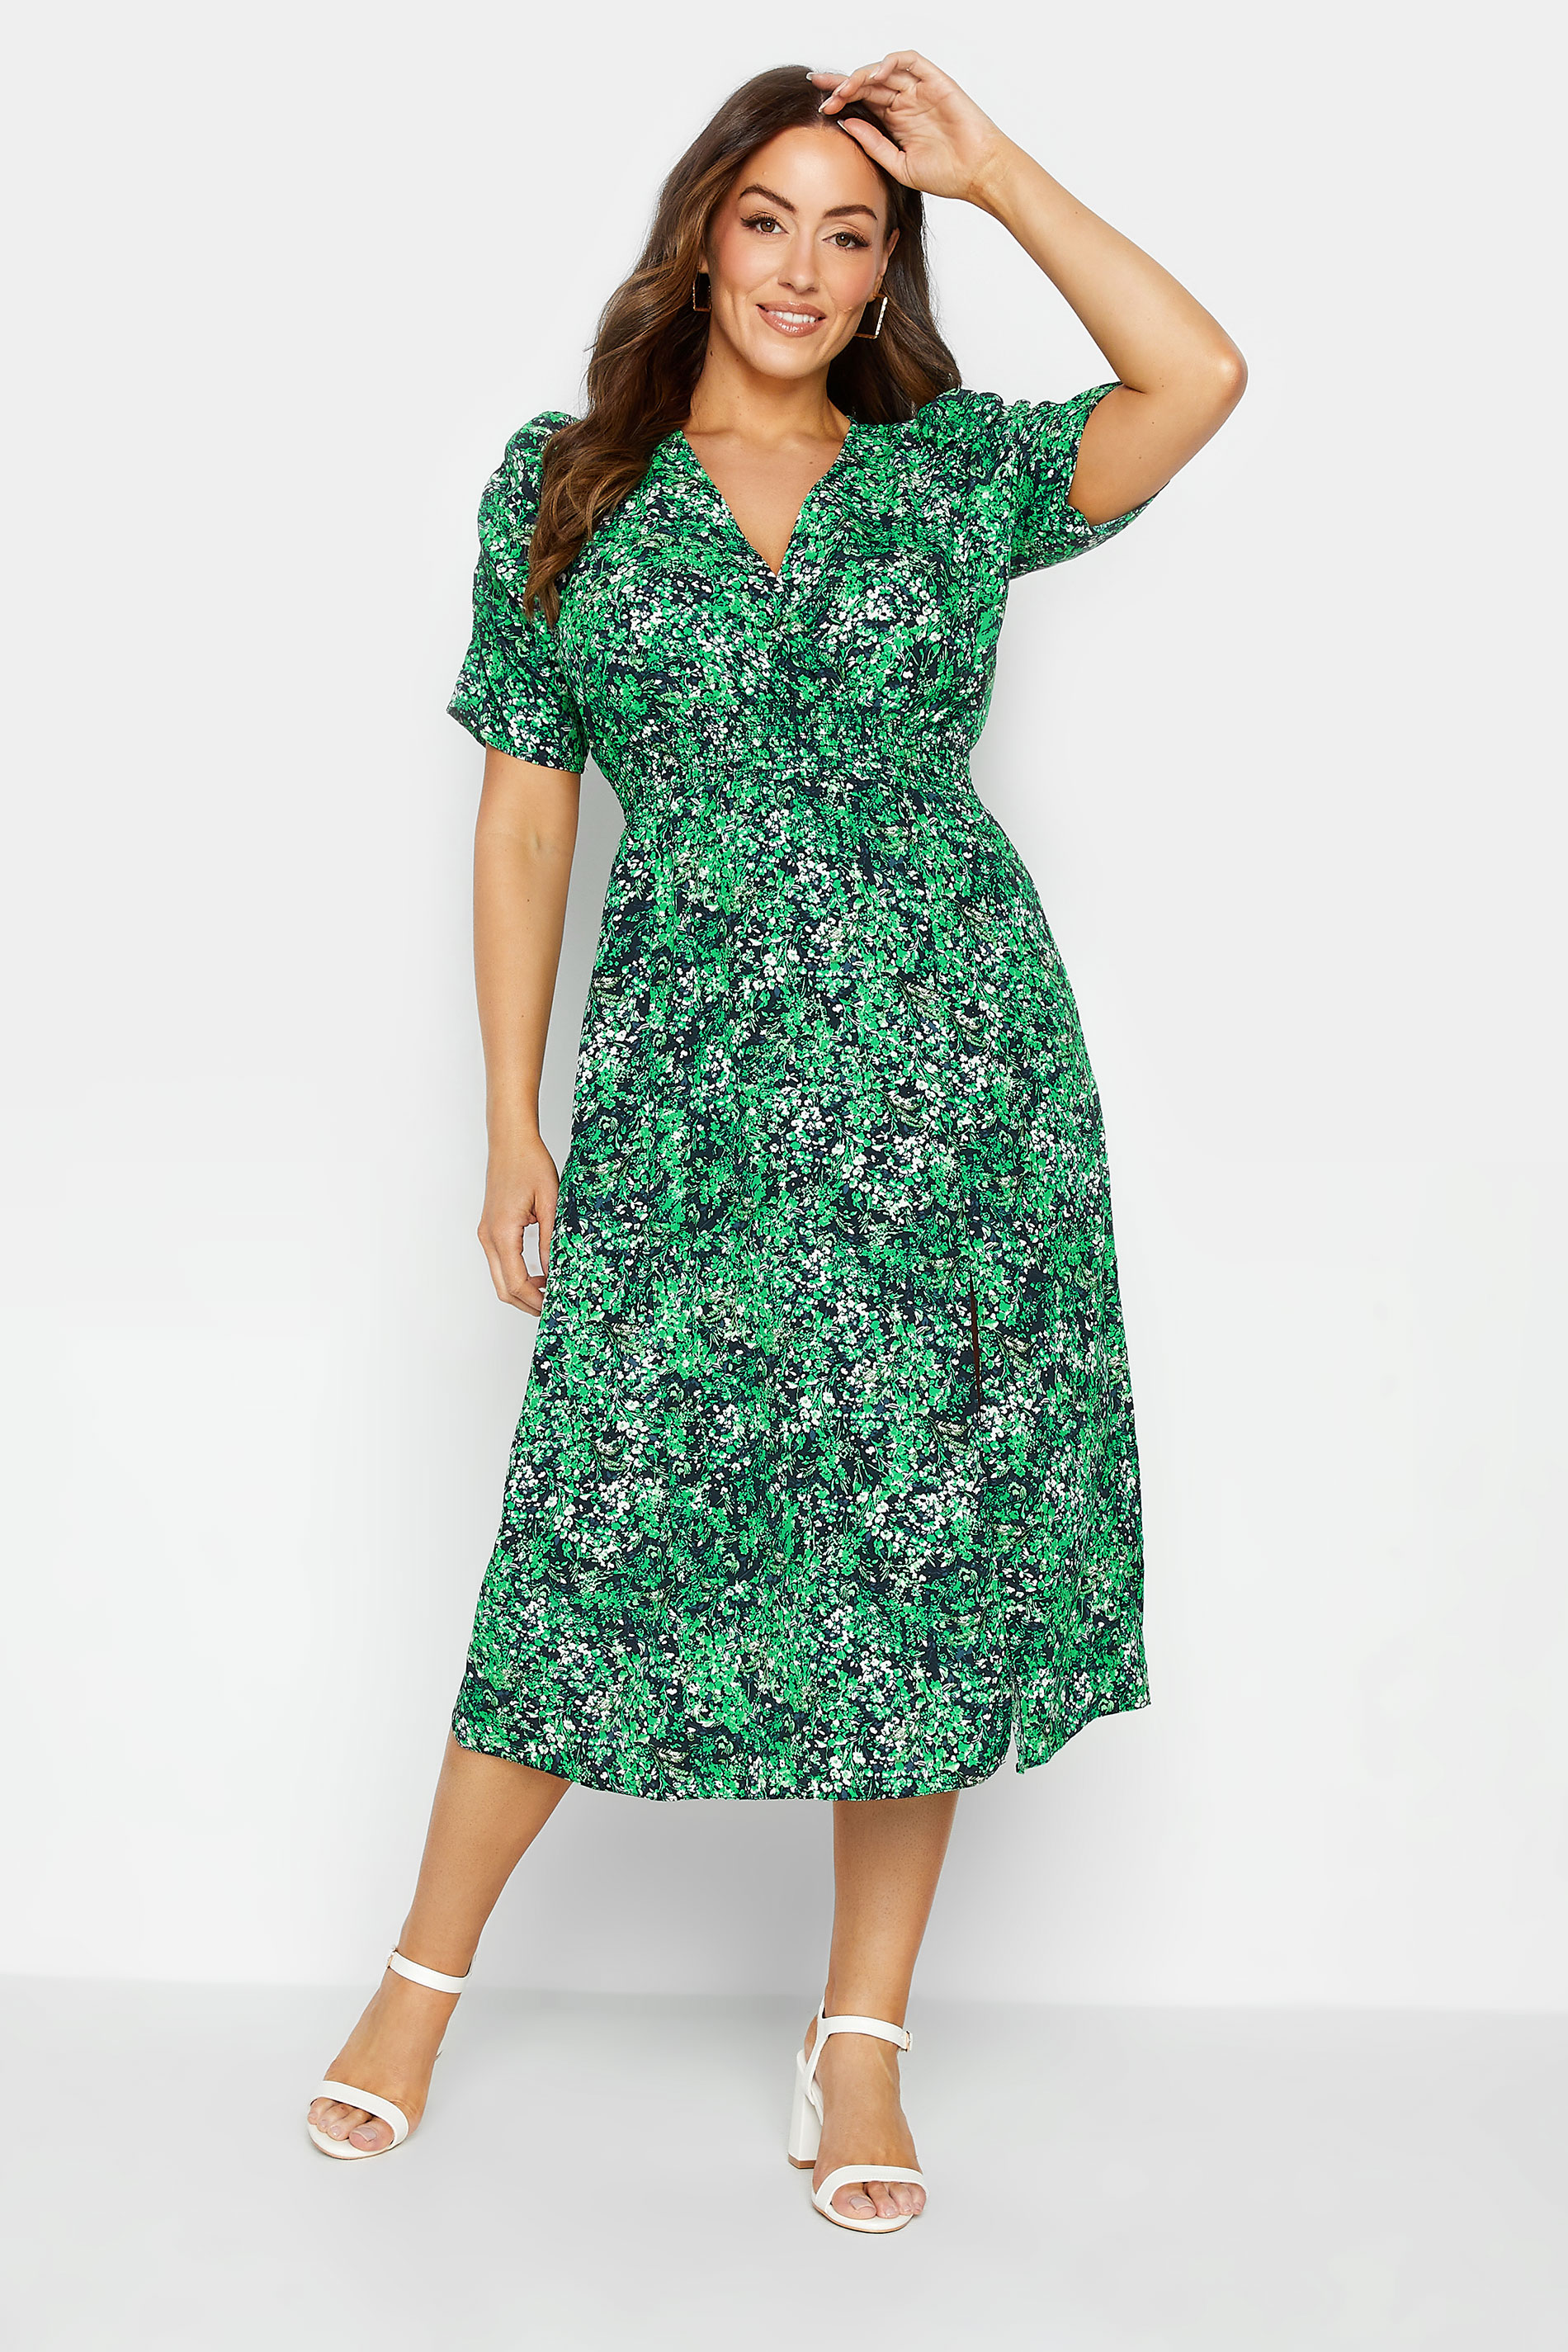 M&Co Green Floral Print Shirred Waist Midi Dress | M&Co 2